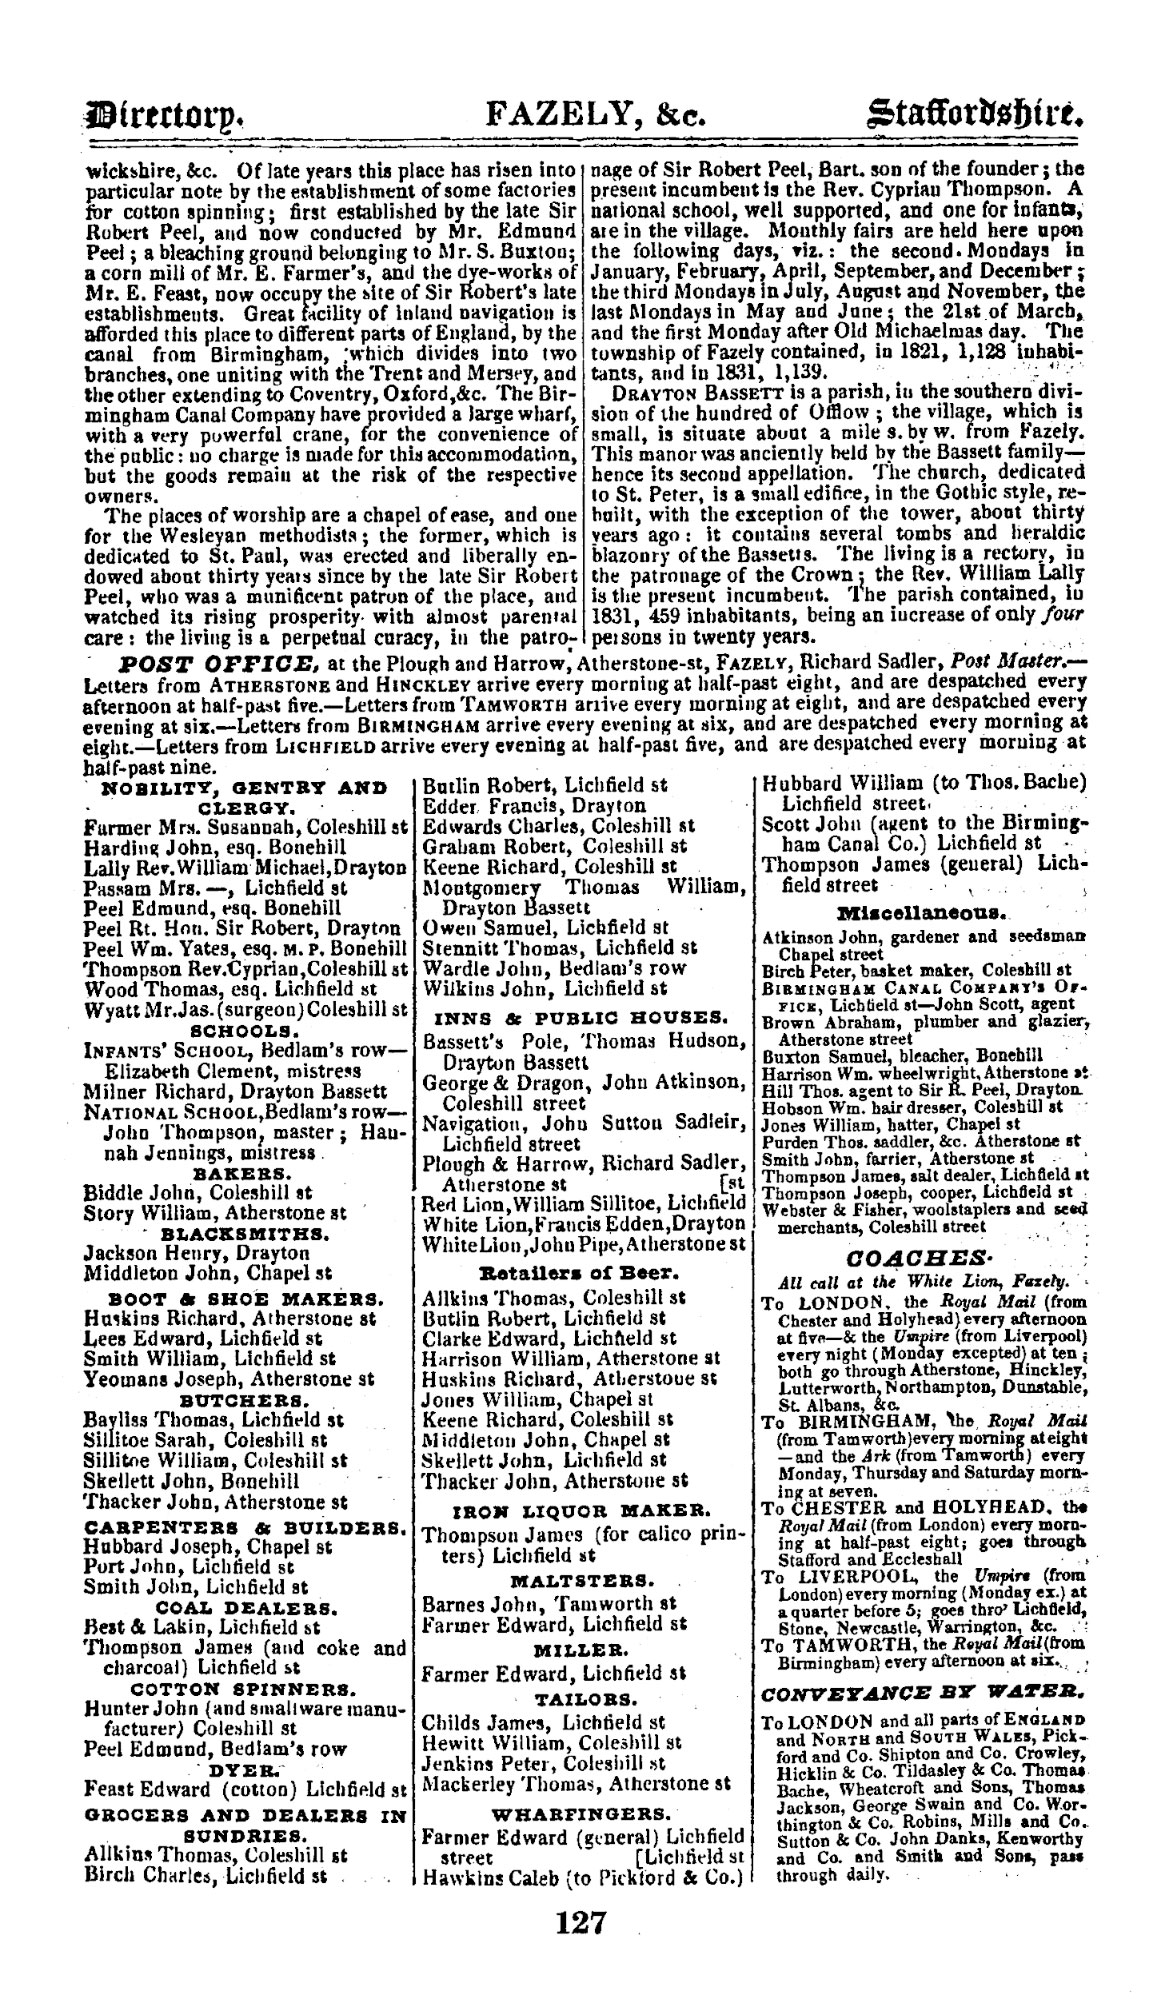 Pigot's Staffordshire Directory, 1835